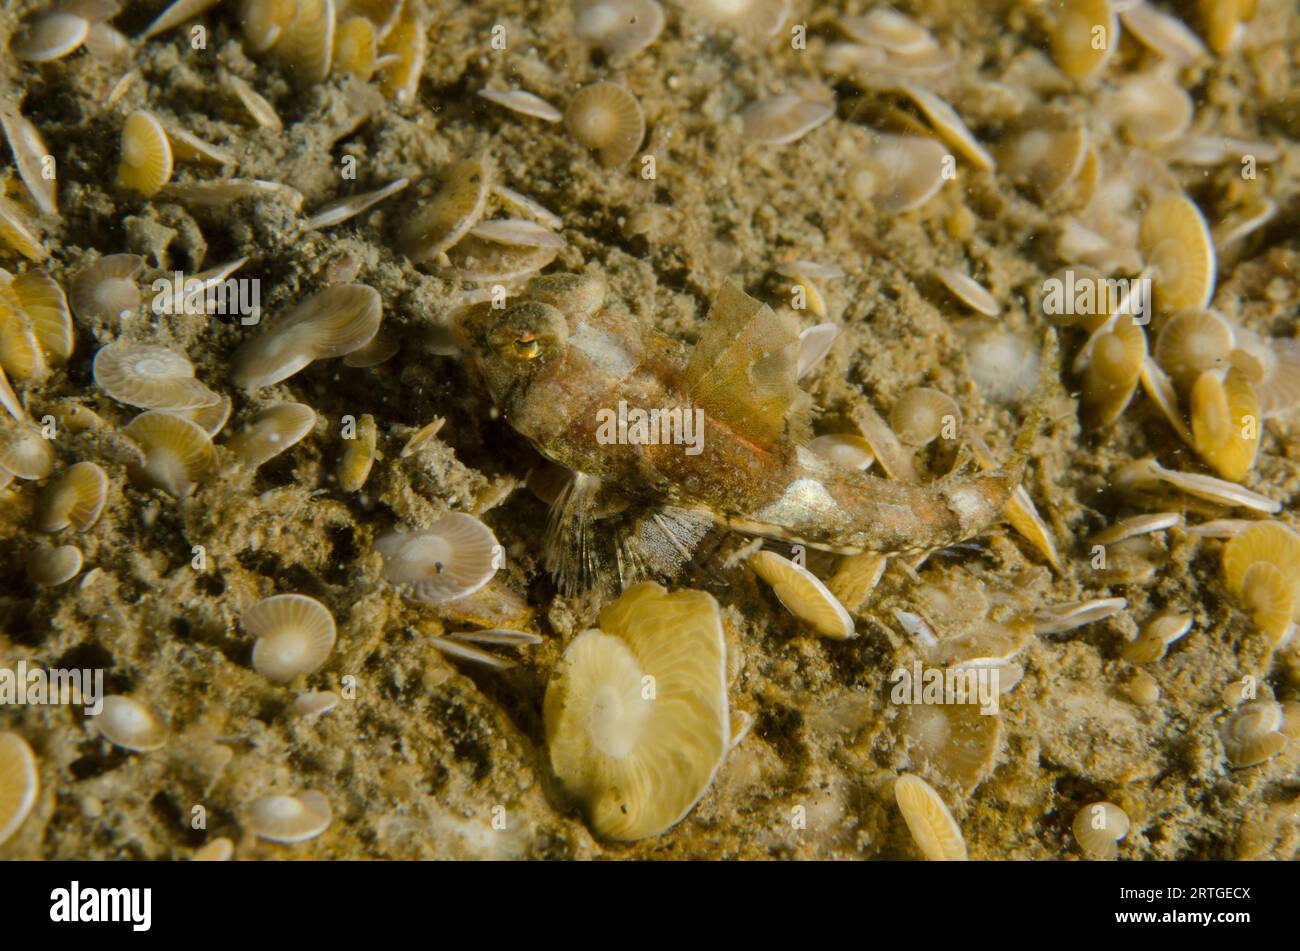 Bartels' Dragonet, Synchiropus bartelsi, with small Foraminifera shells, Foraminifera Infraphylum, on sand, Tasi Tolu dive site, Dili, East Timor Stock Photo